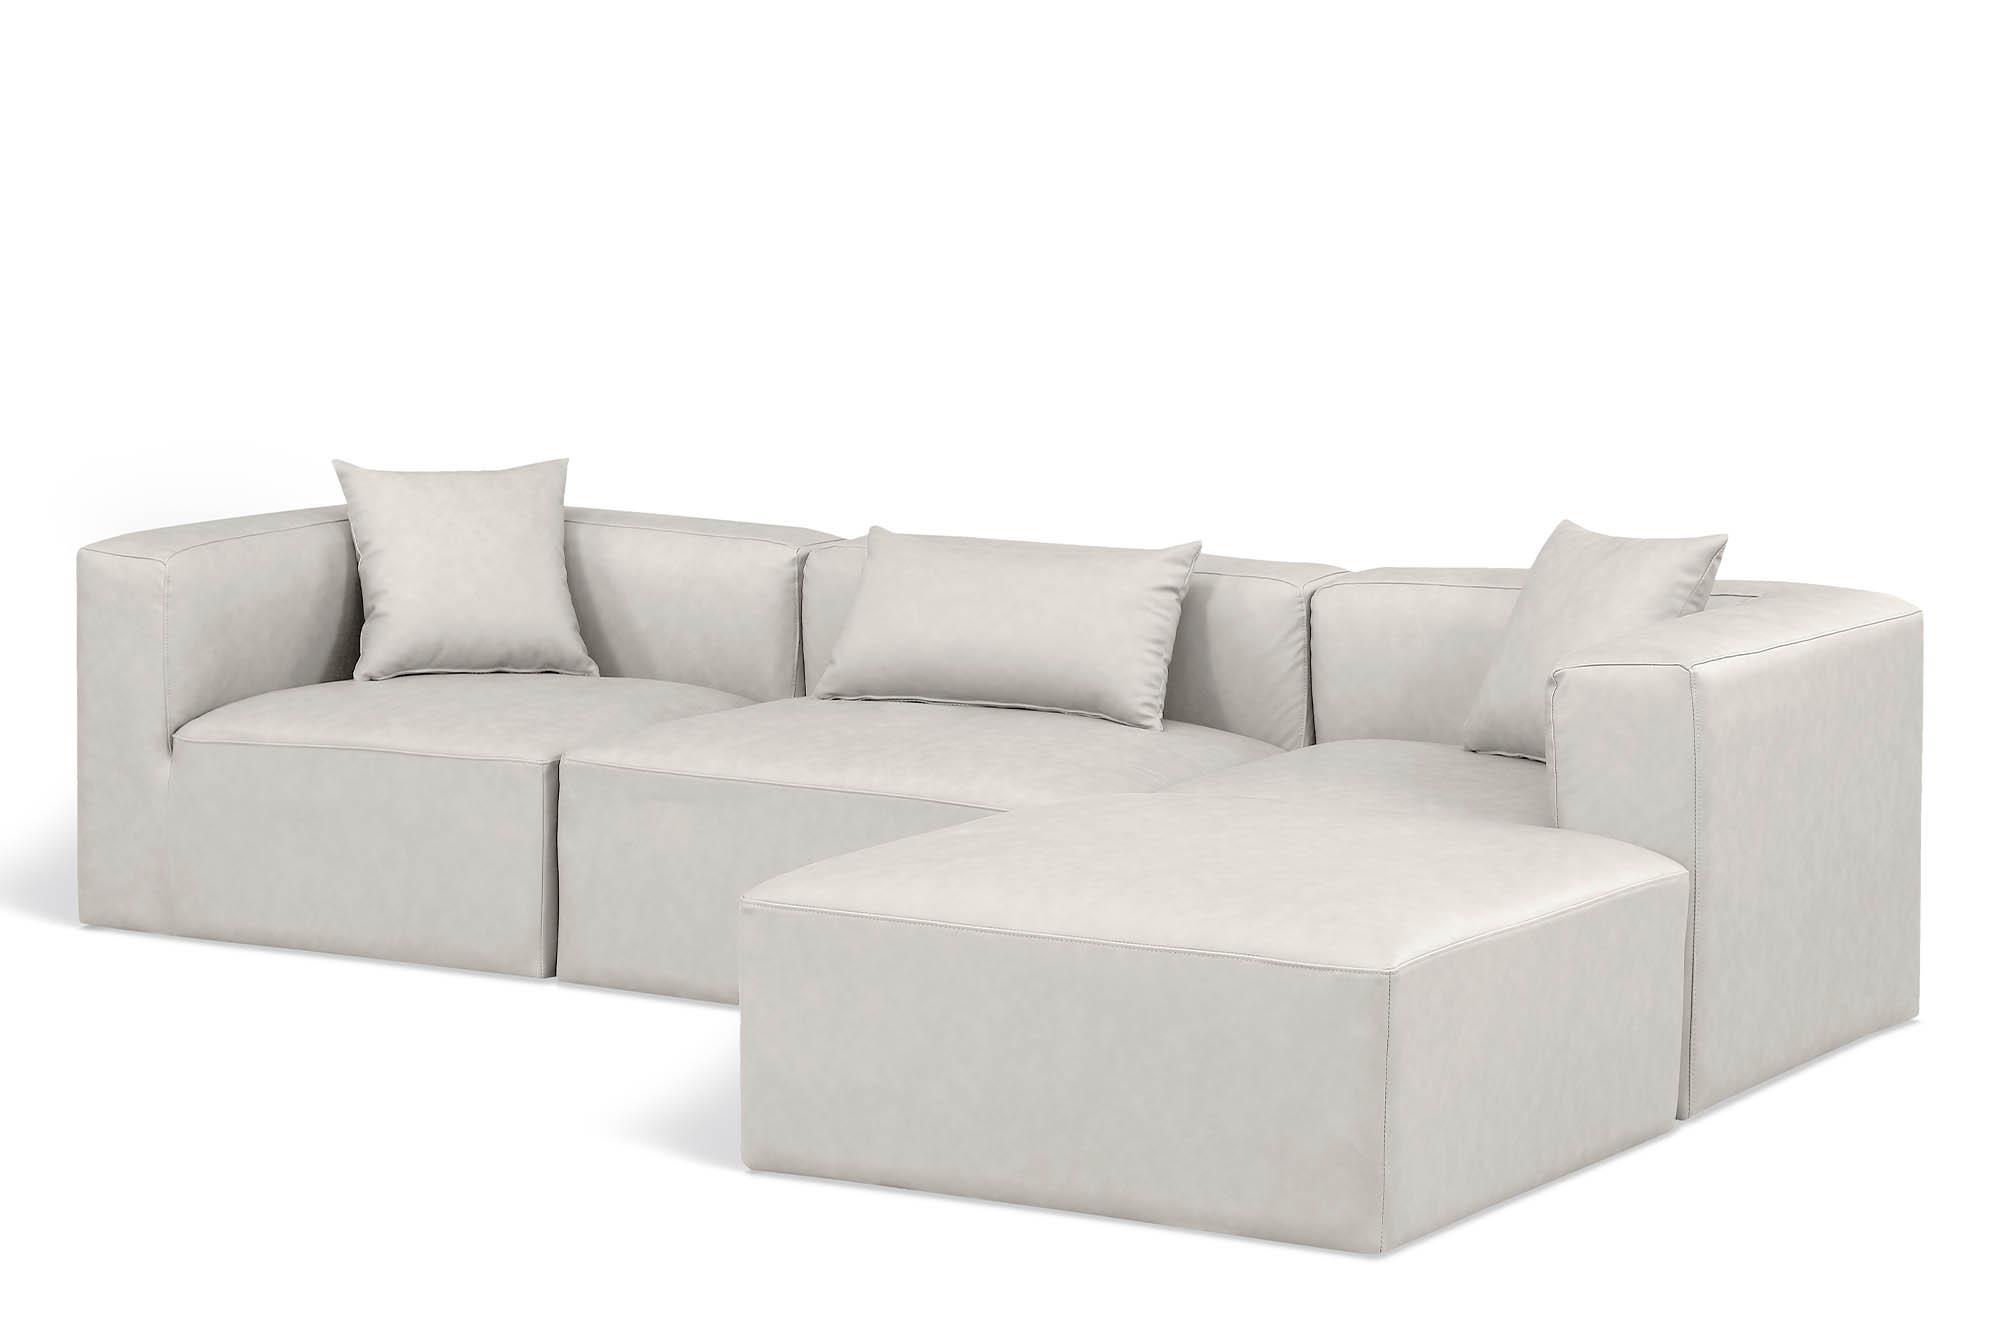 Contemporary, Modern Modular Sectional Sofa CUBE 668Cream-Sec4A 668Cream-Sec4A in Cream Faux Leather